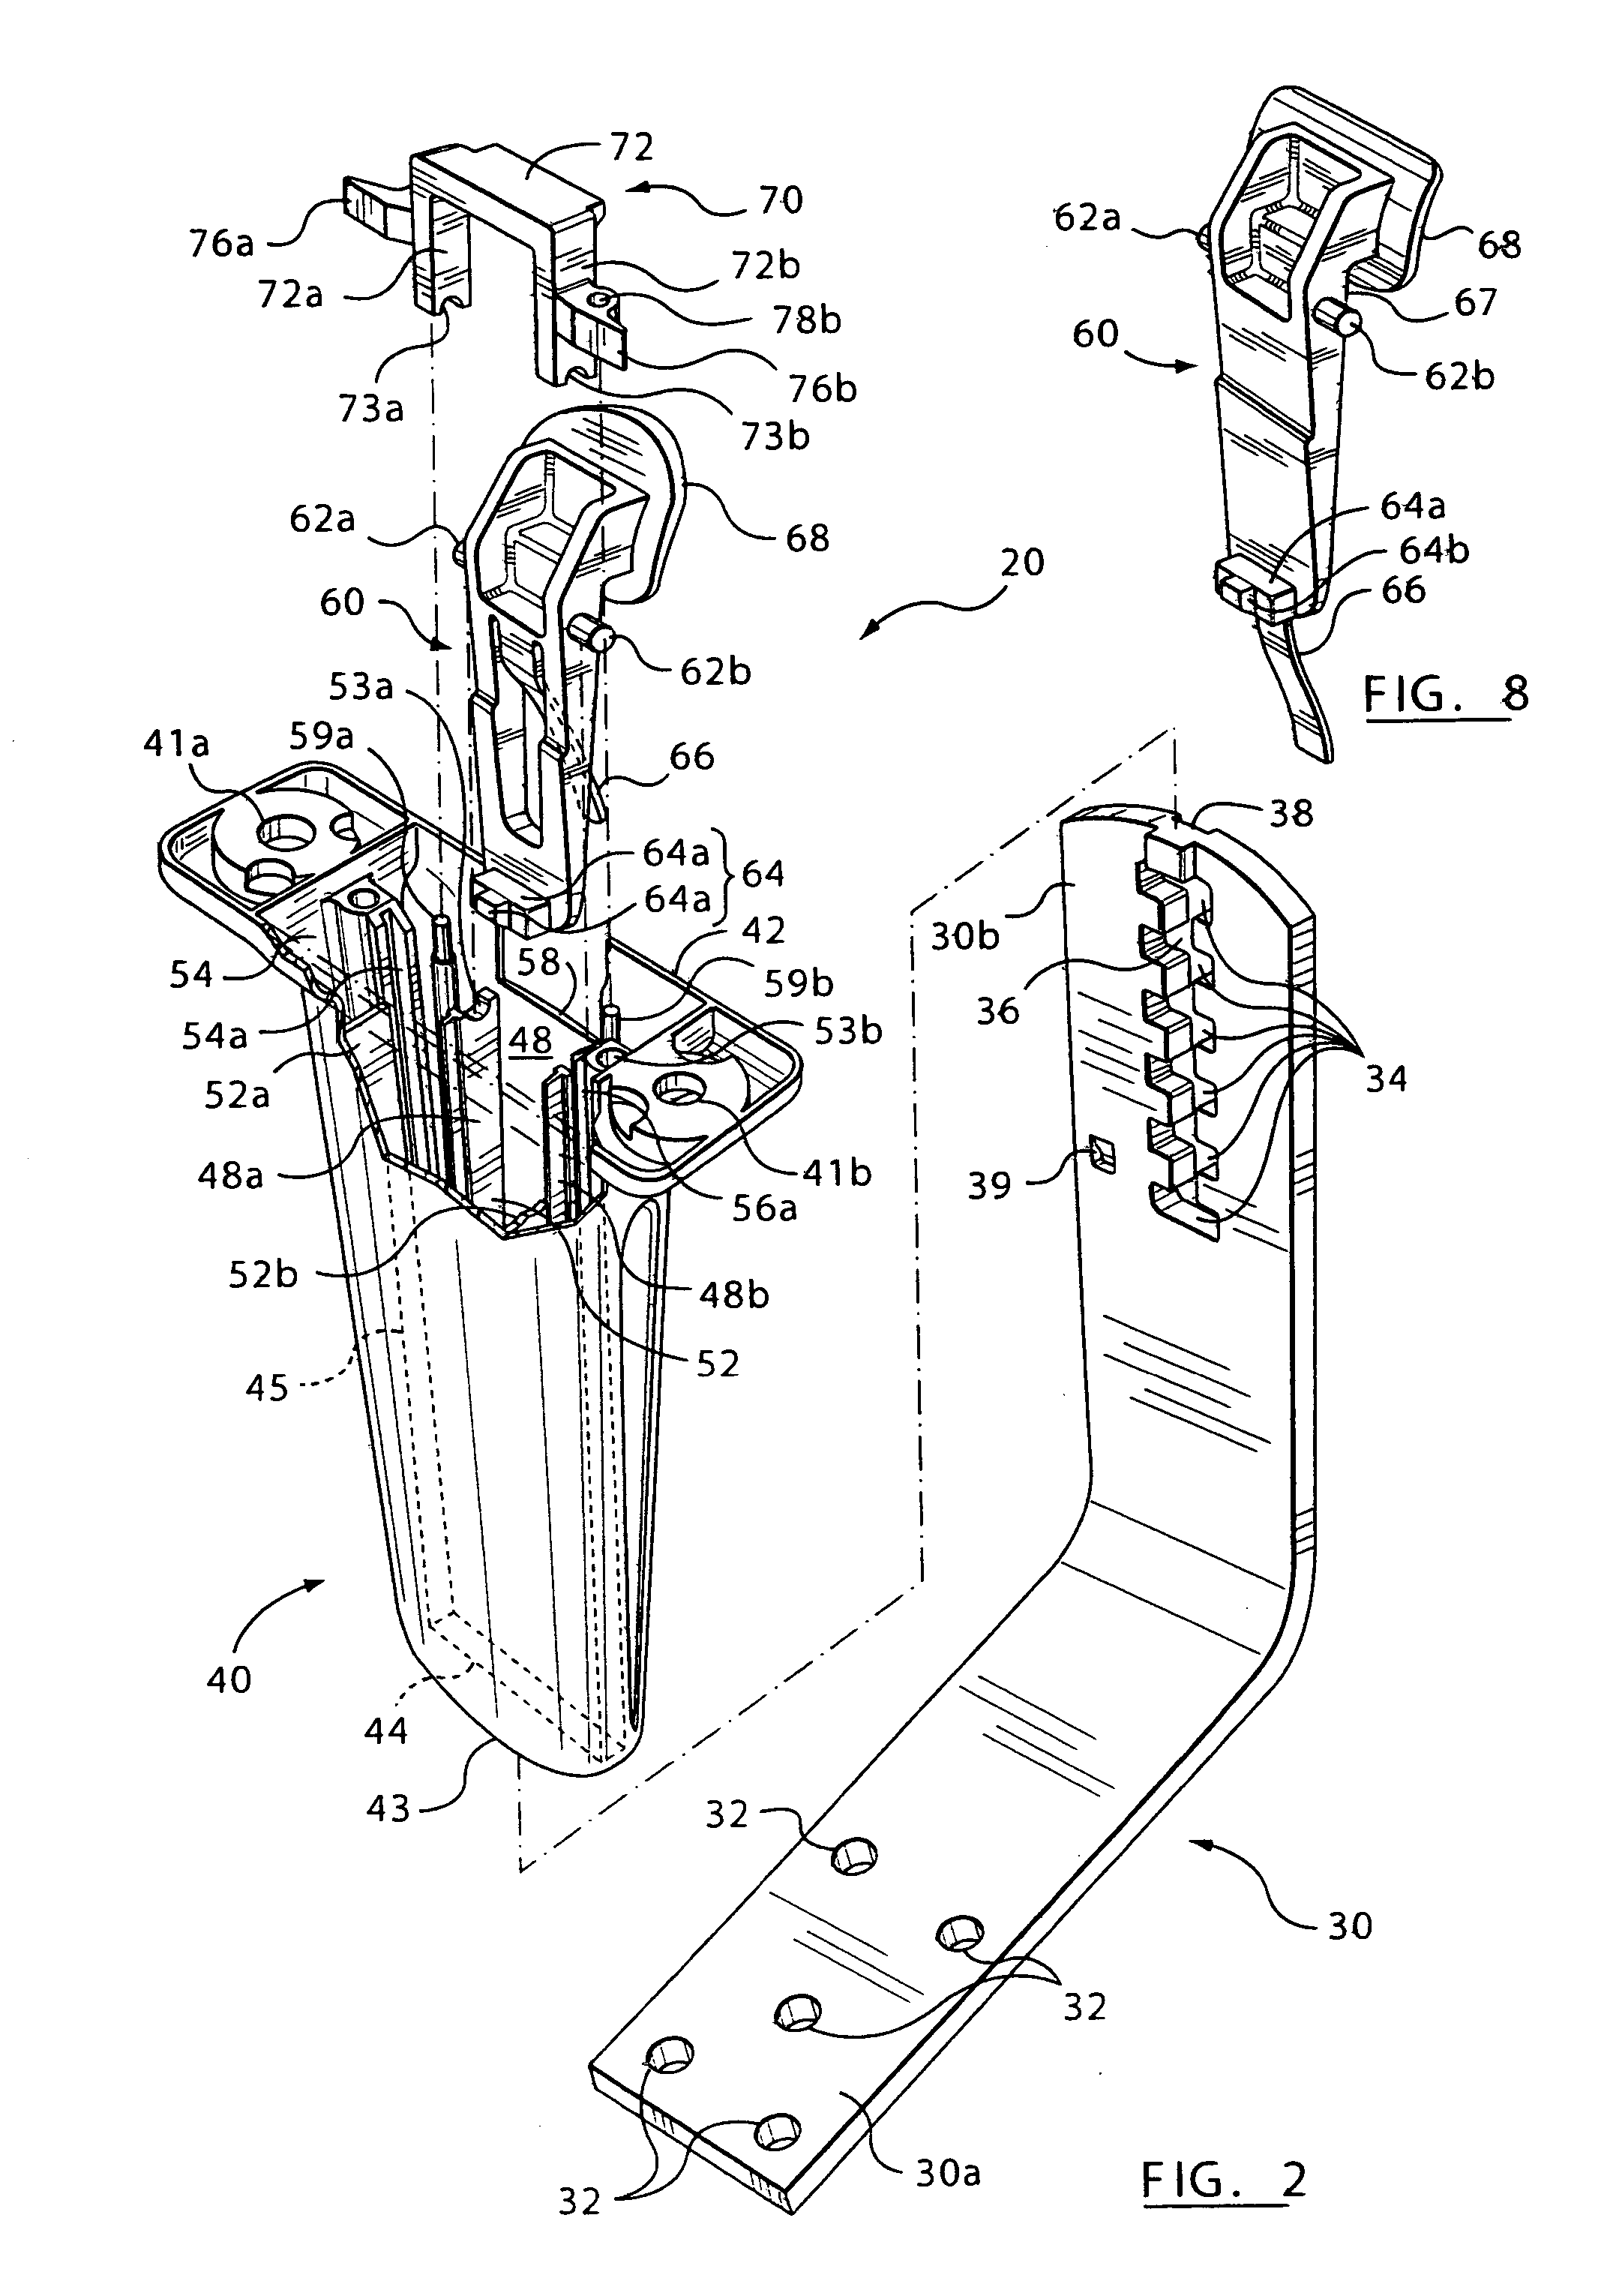 Height-adjustment mechanism for an armrest